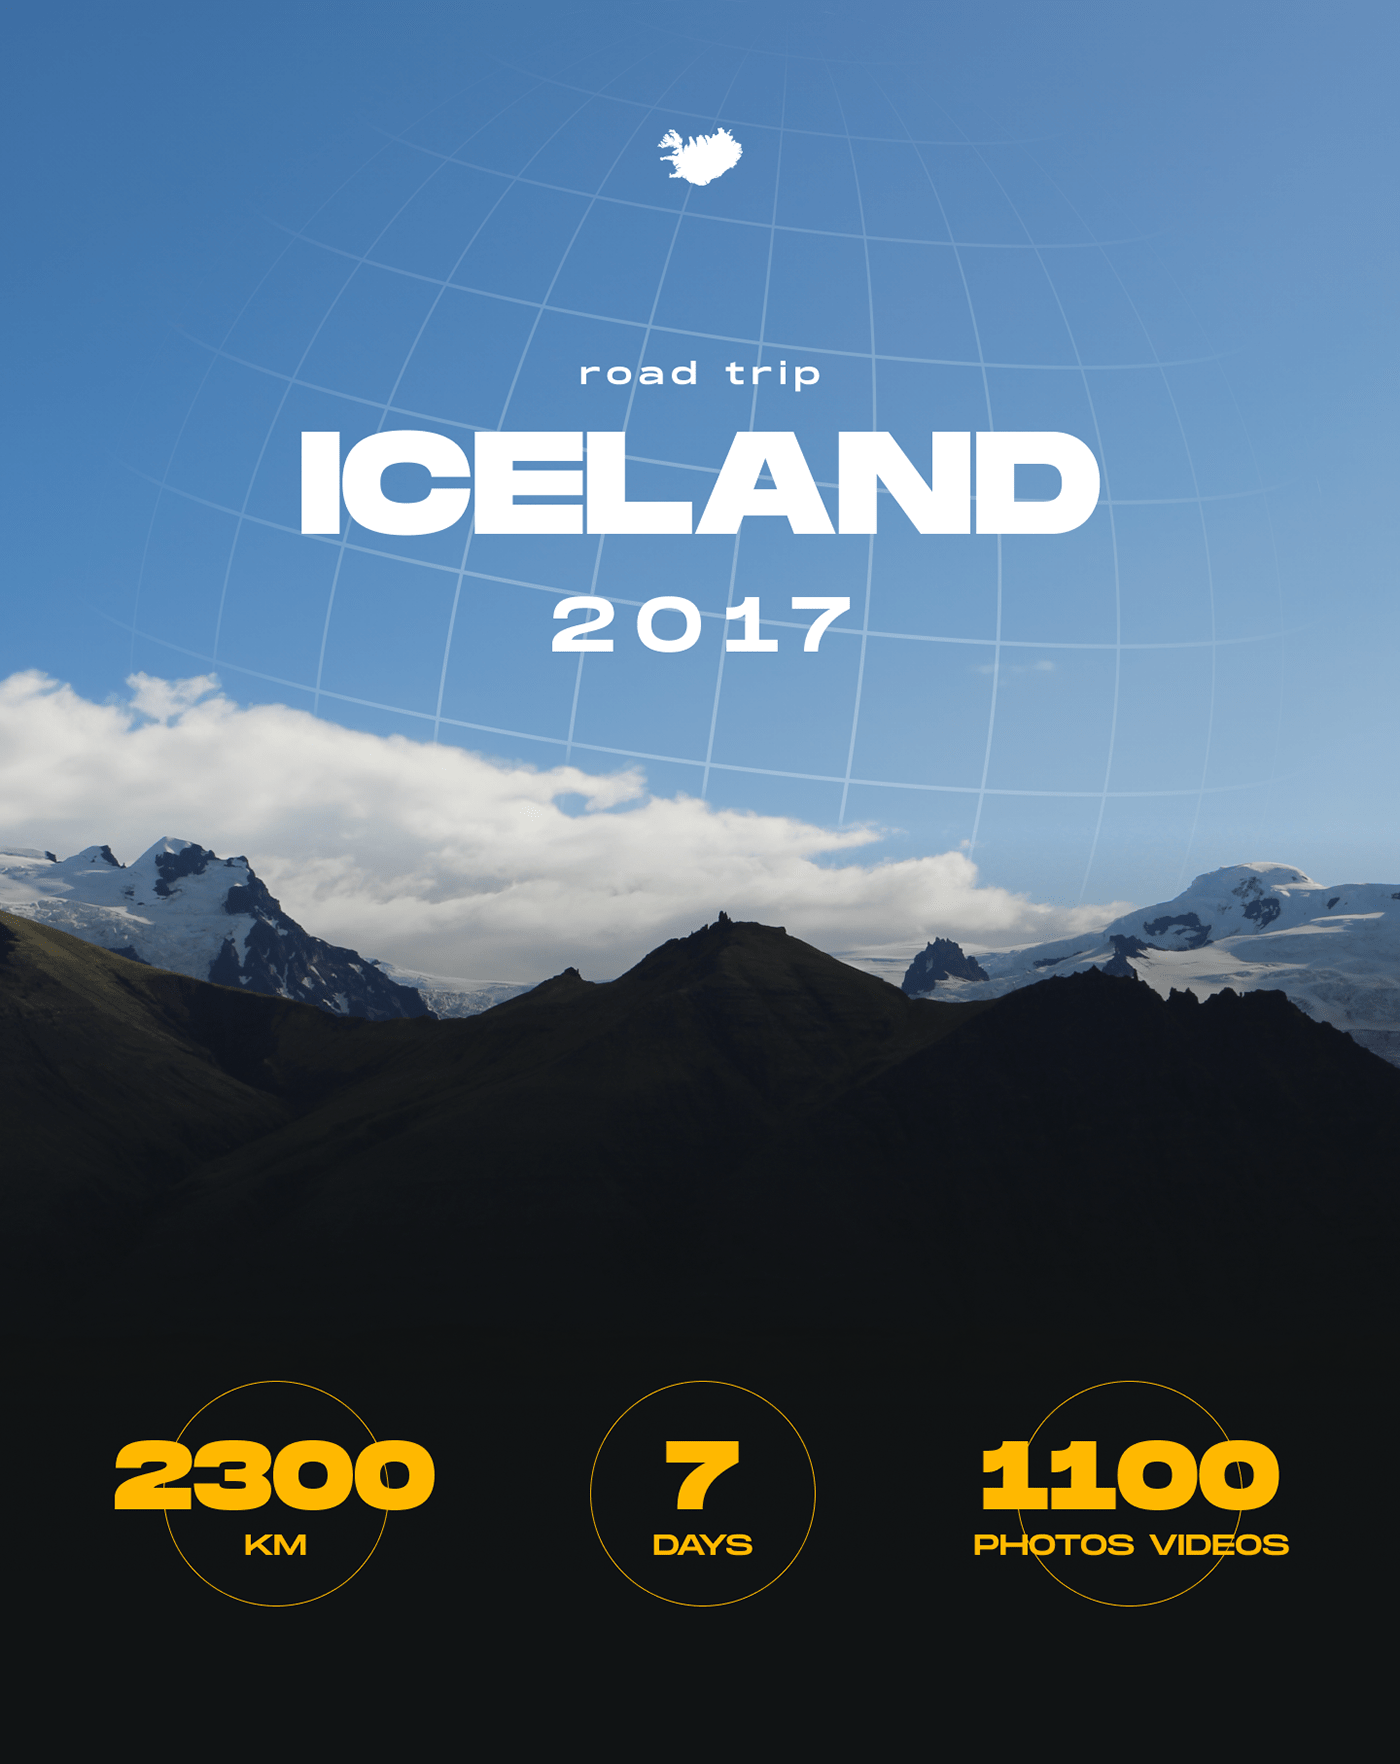 art photo Photographie islande iceland Landscape paysage Nature trip voyage